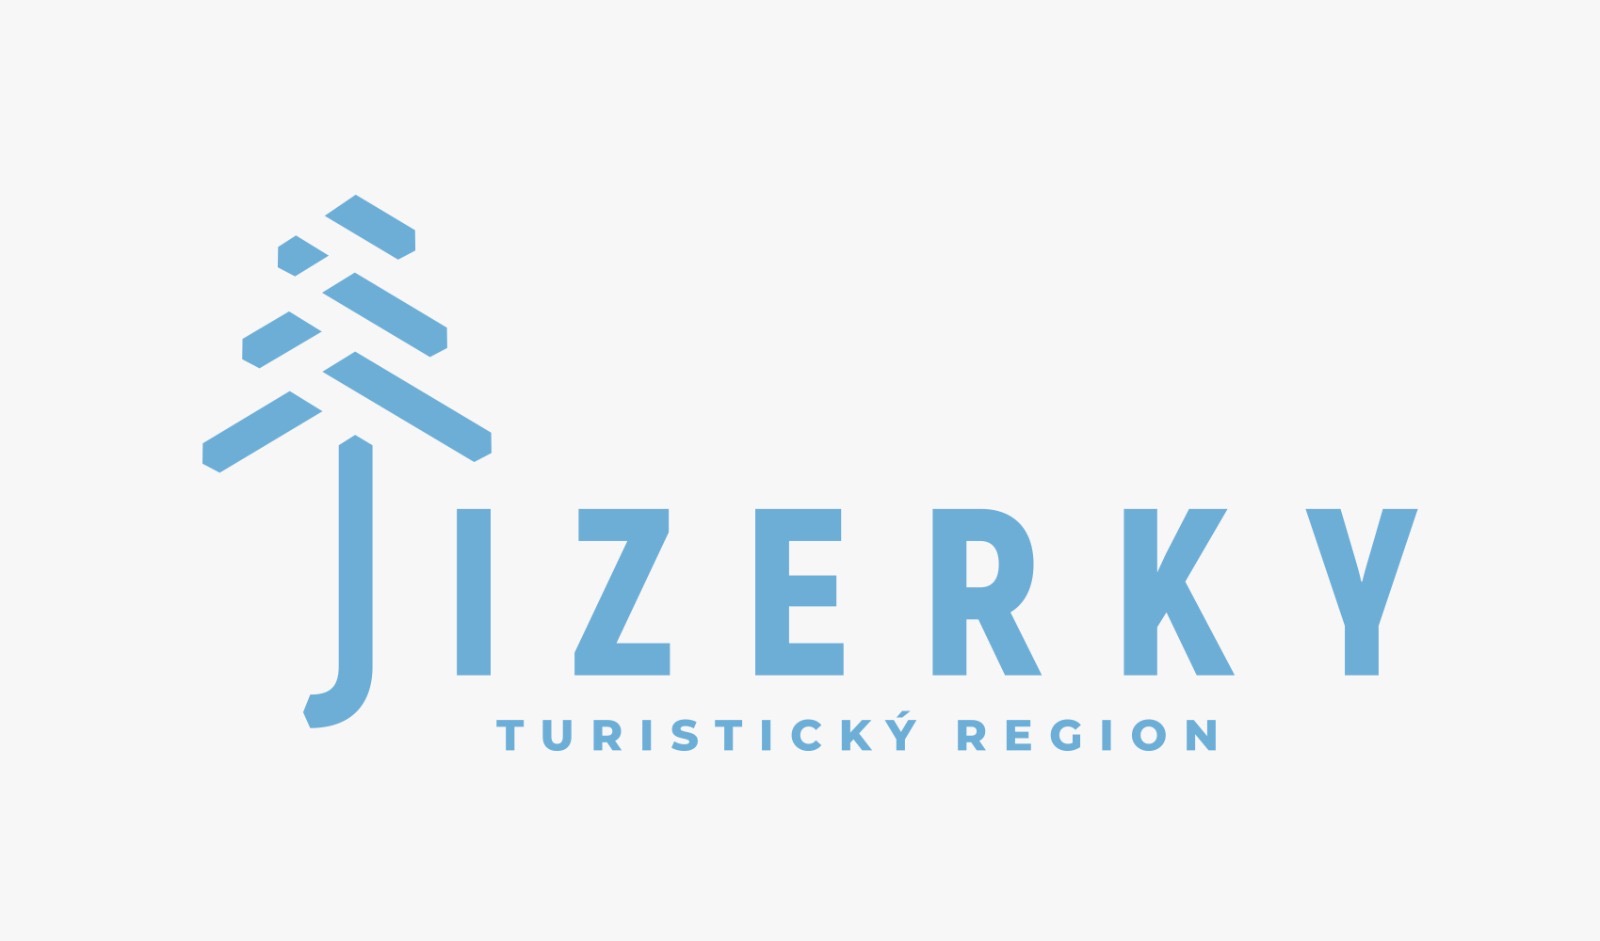 Jizerky turistický region